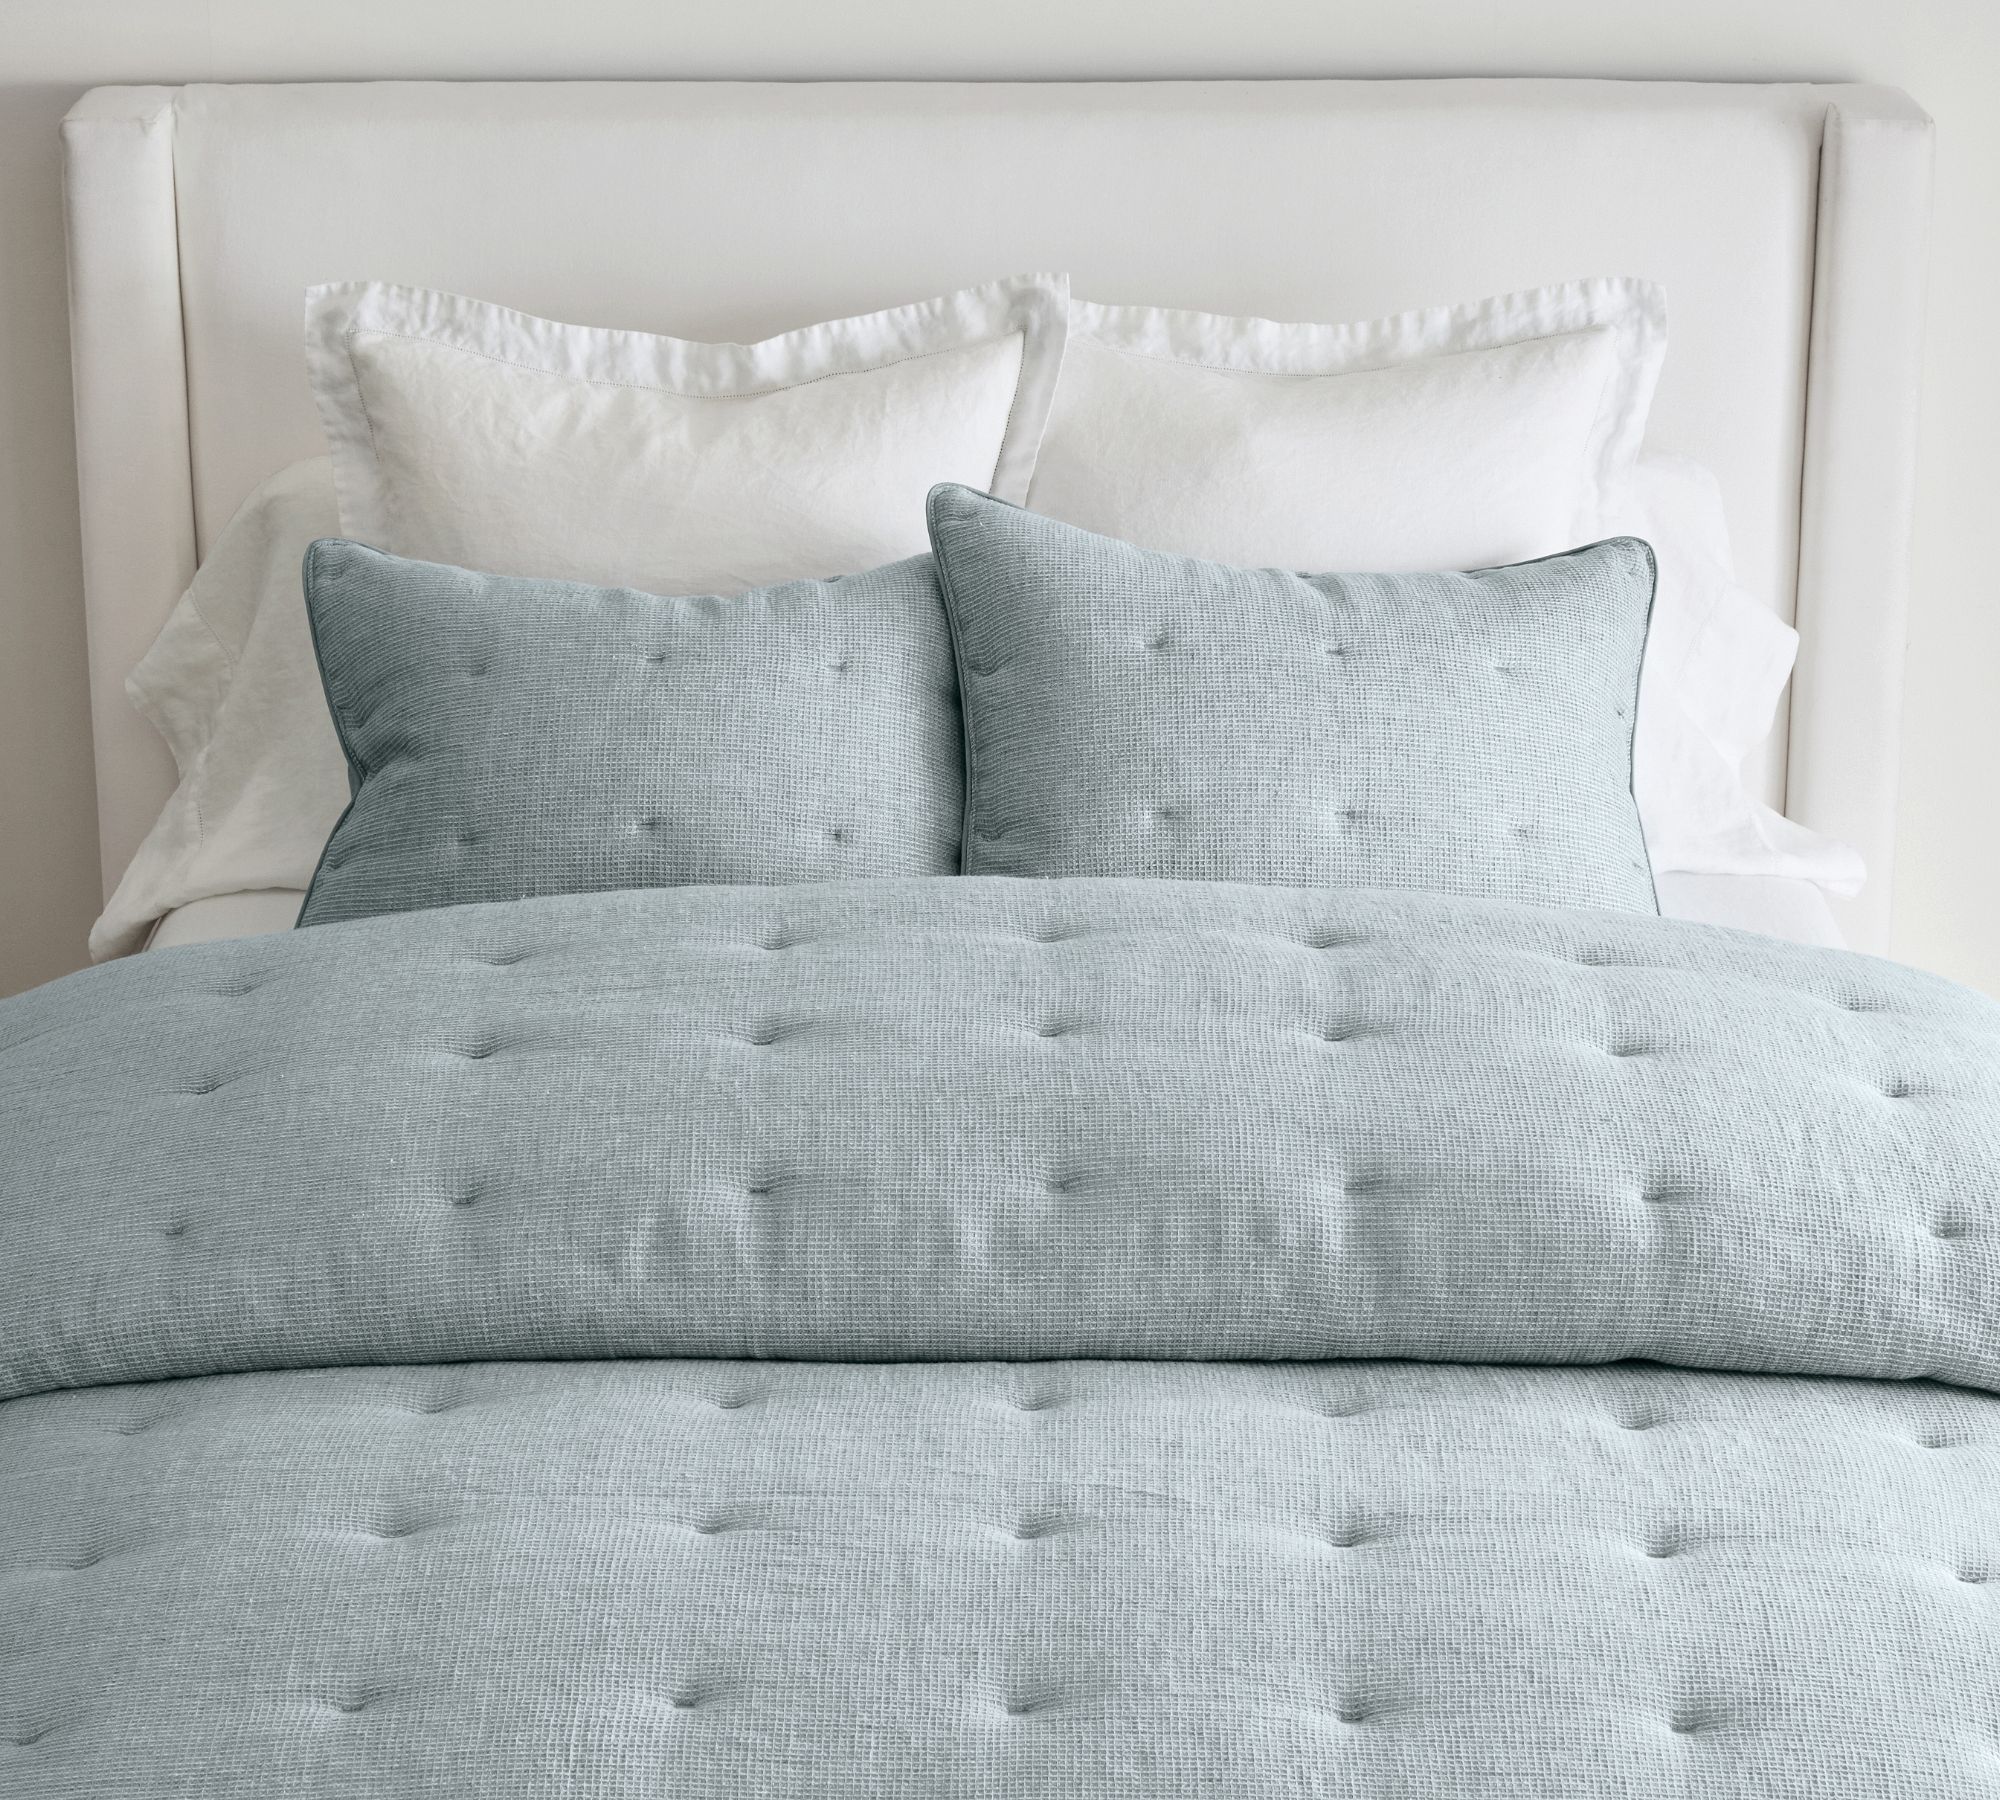 Light blue bedding set on a white upholstered bed.